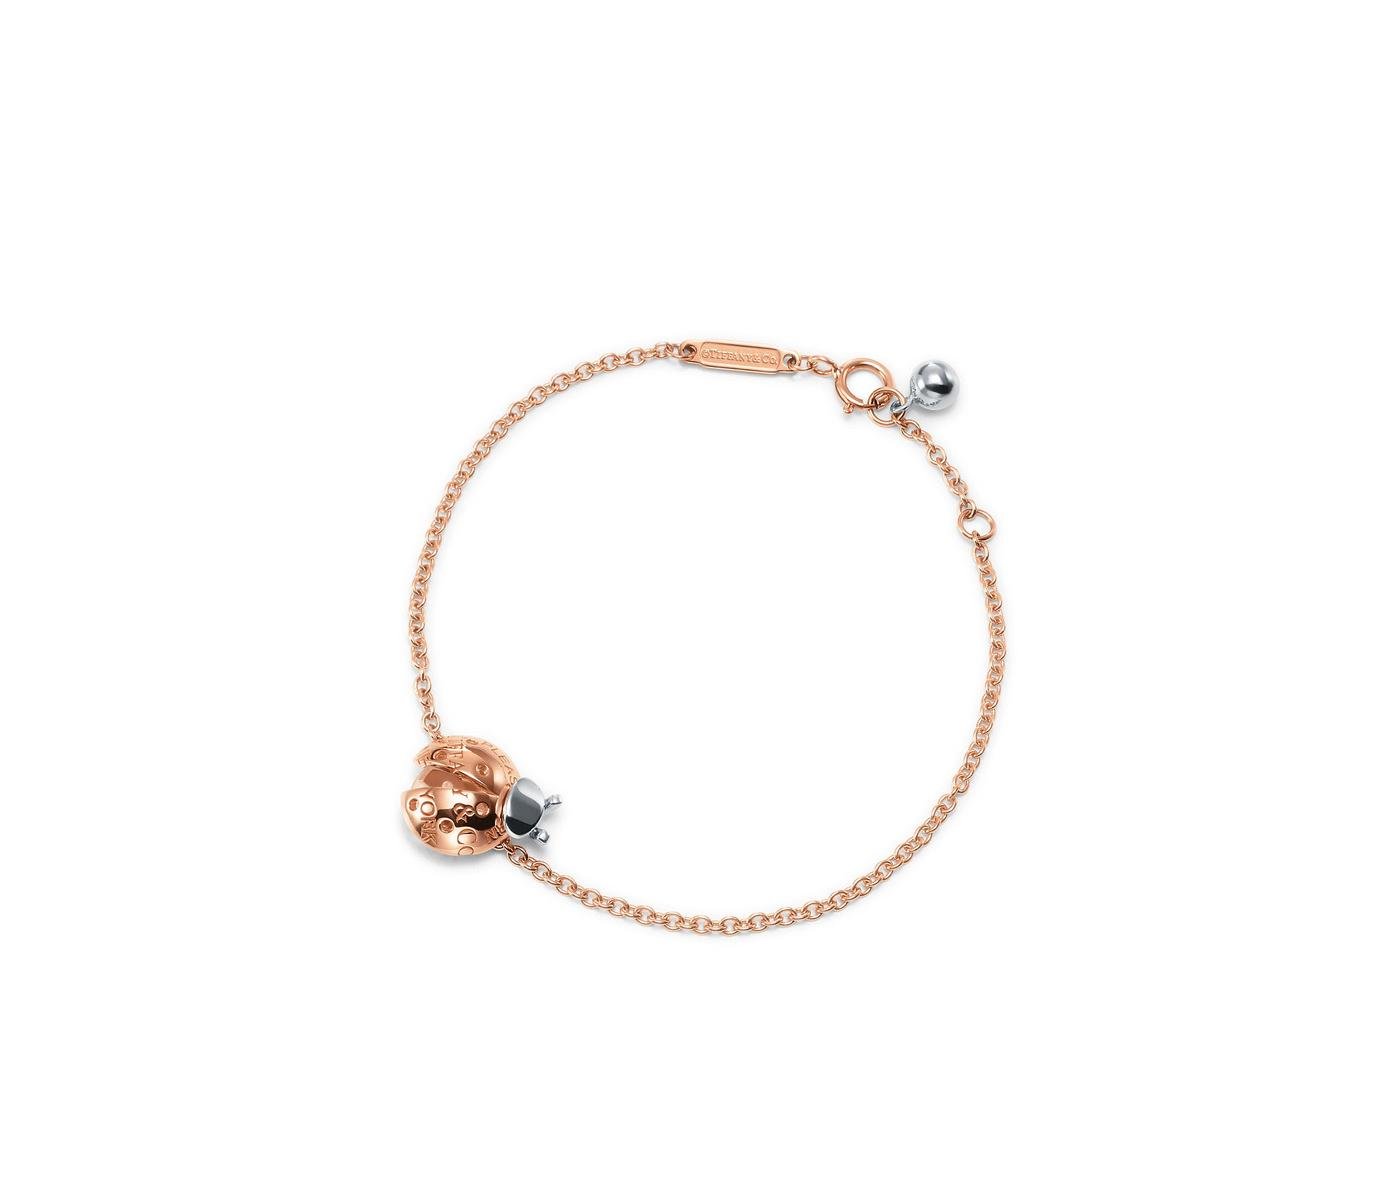 Bracelet by Tiffany